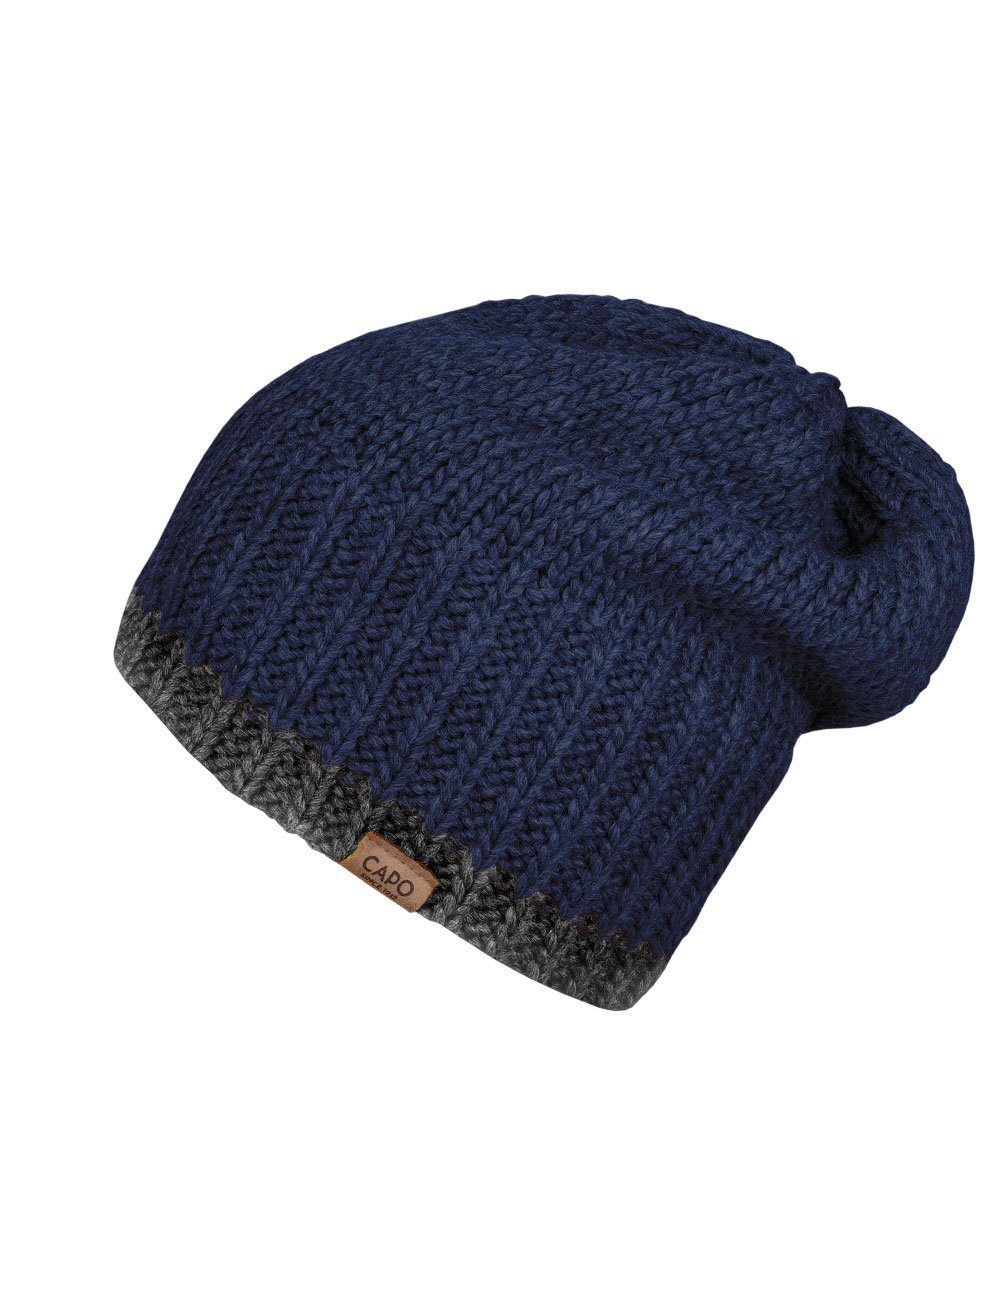 Germany CAPO-KEELIN CAP knitted navy CAPO in Made fleece lining short Strickmütze cap,